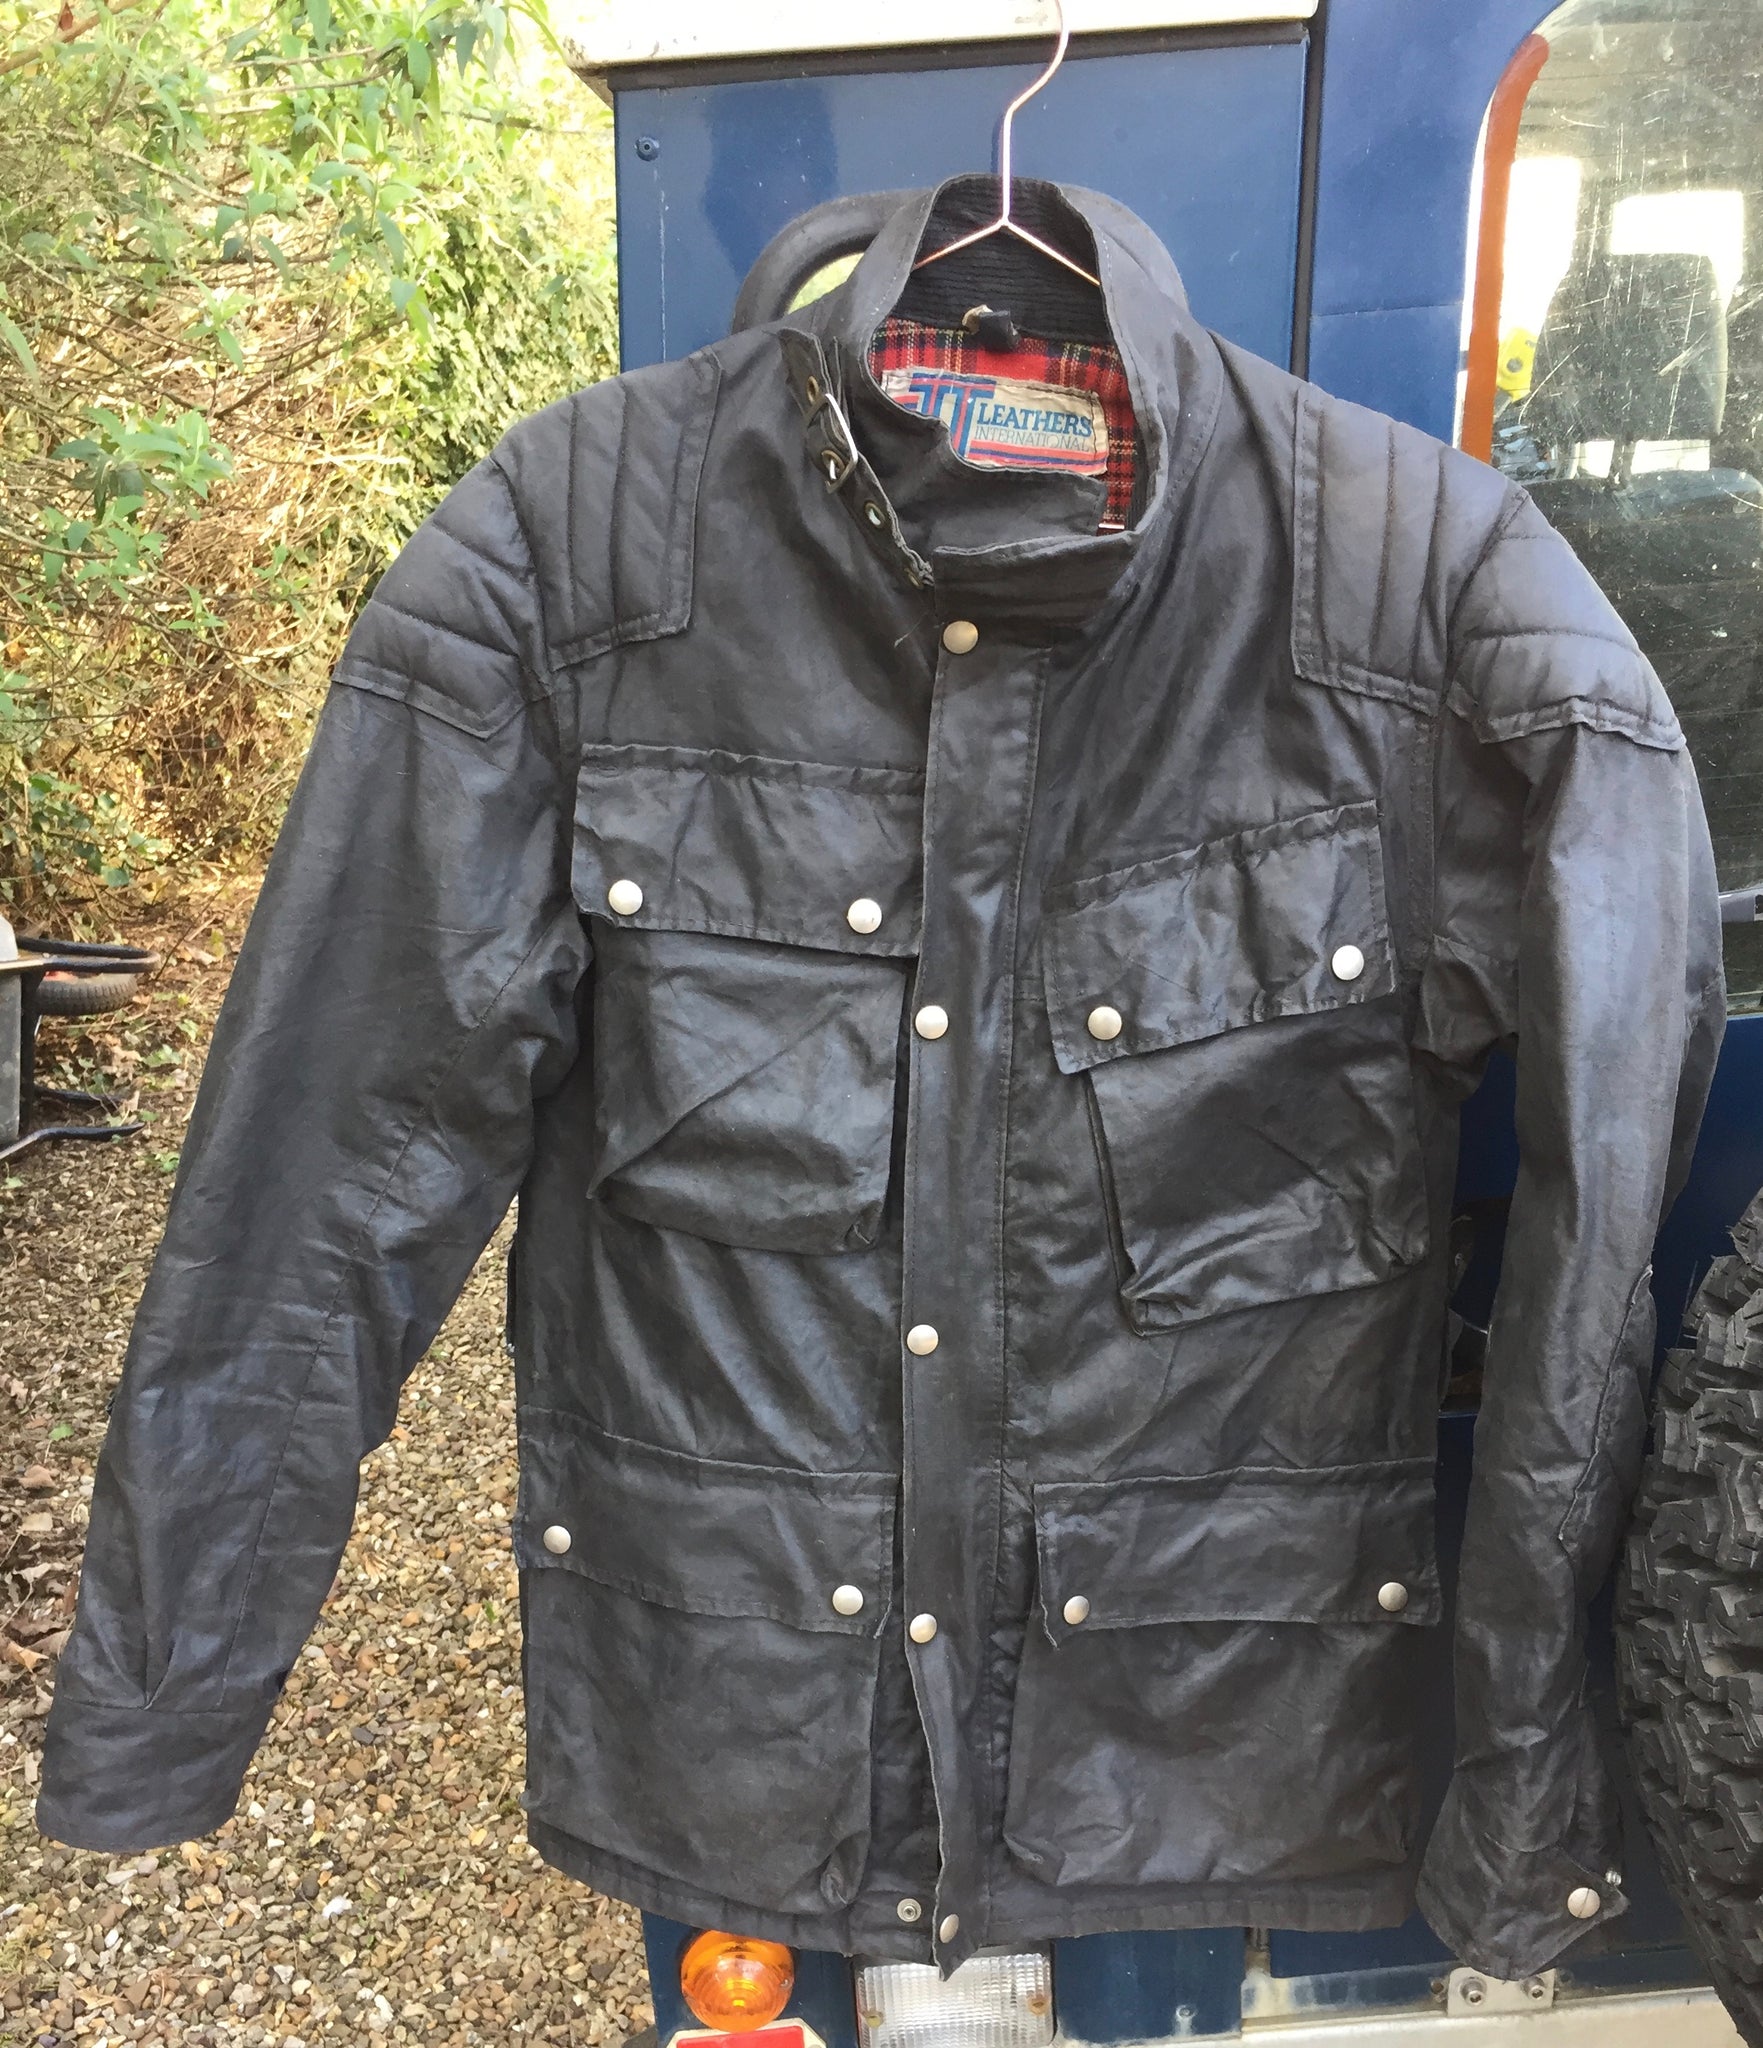 TT Leathers International Waxed Cotton Motorcyle Jacket – Tinker and Fix